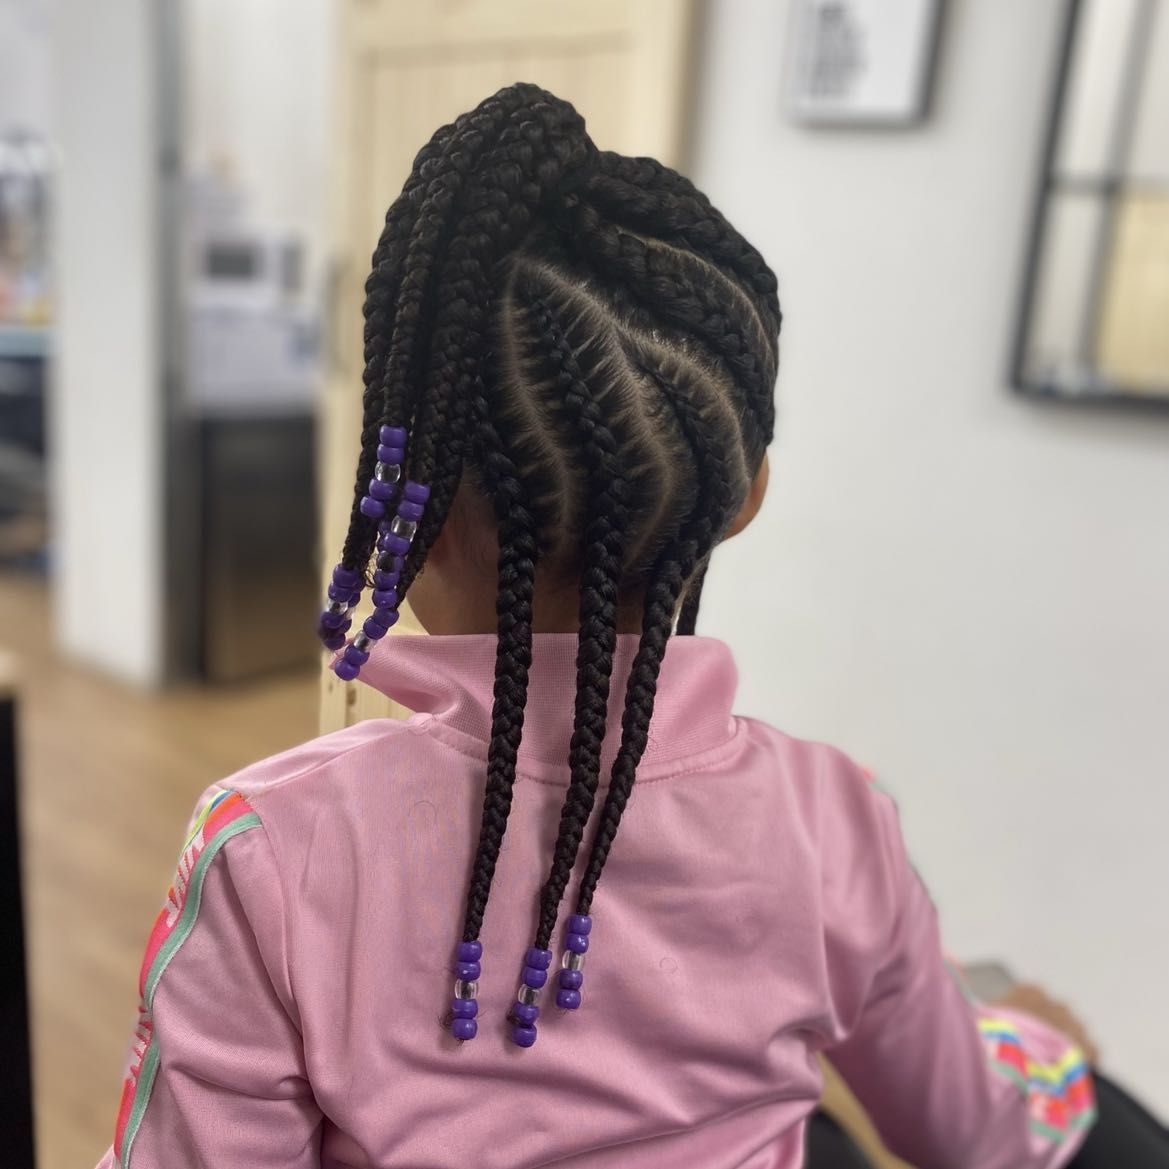 Kids braids w/beads or accessories (no extensions) portfolio